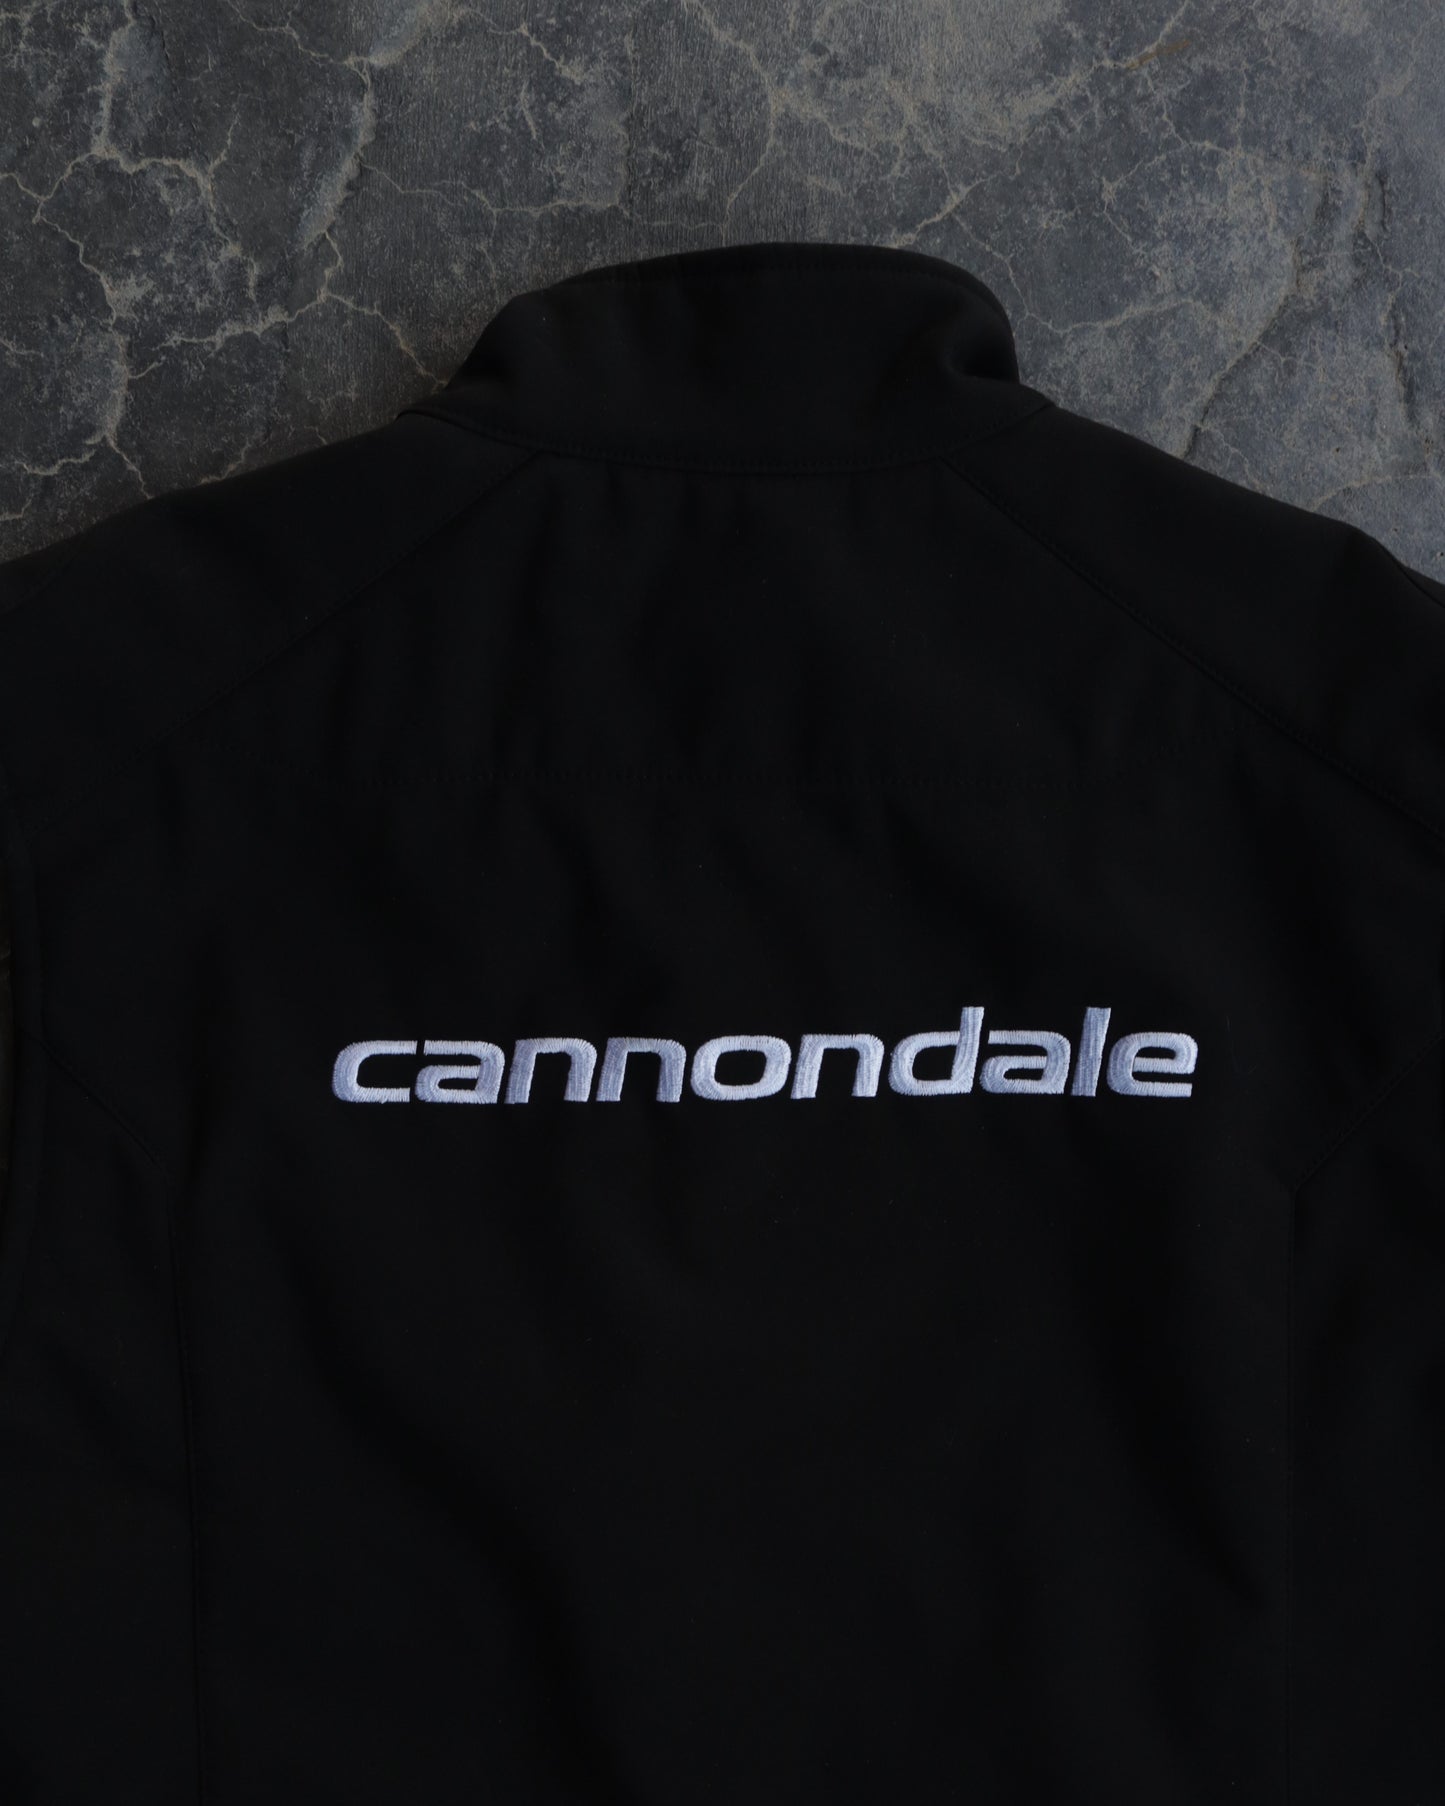 Modern Alpinetars Canondale Black Full Zip Vest - L